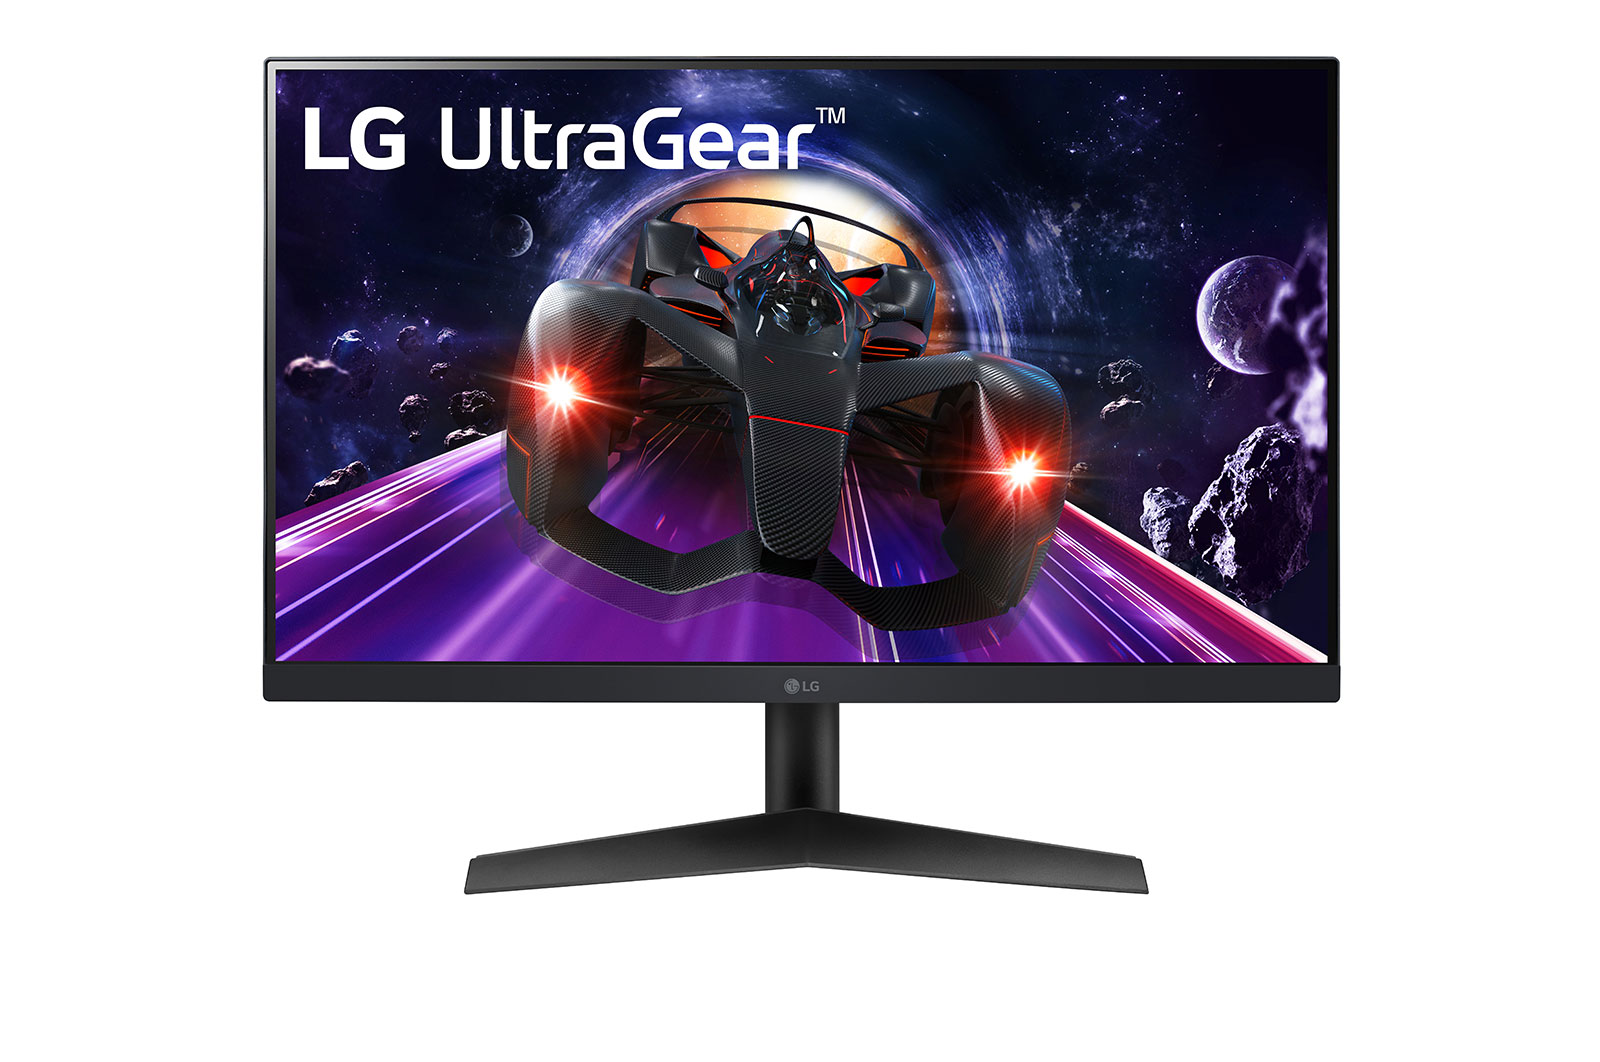 LG Ultra Gear Gaming Monitor, 24 Inch, 144Hz, 1ms - 24GN60R-B